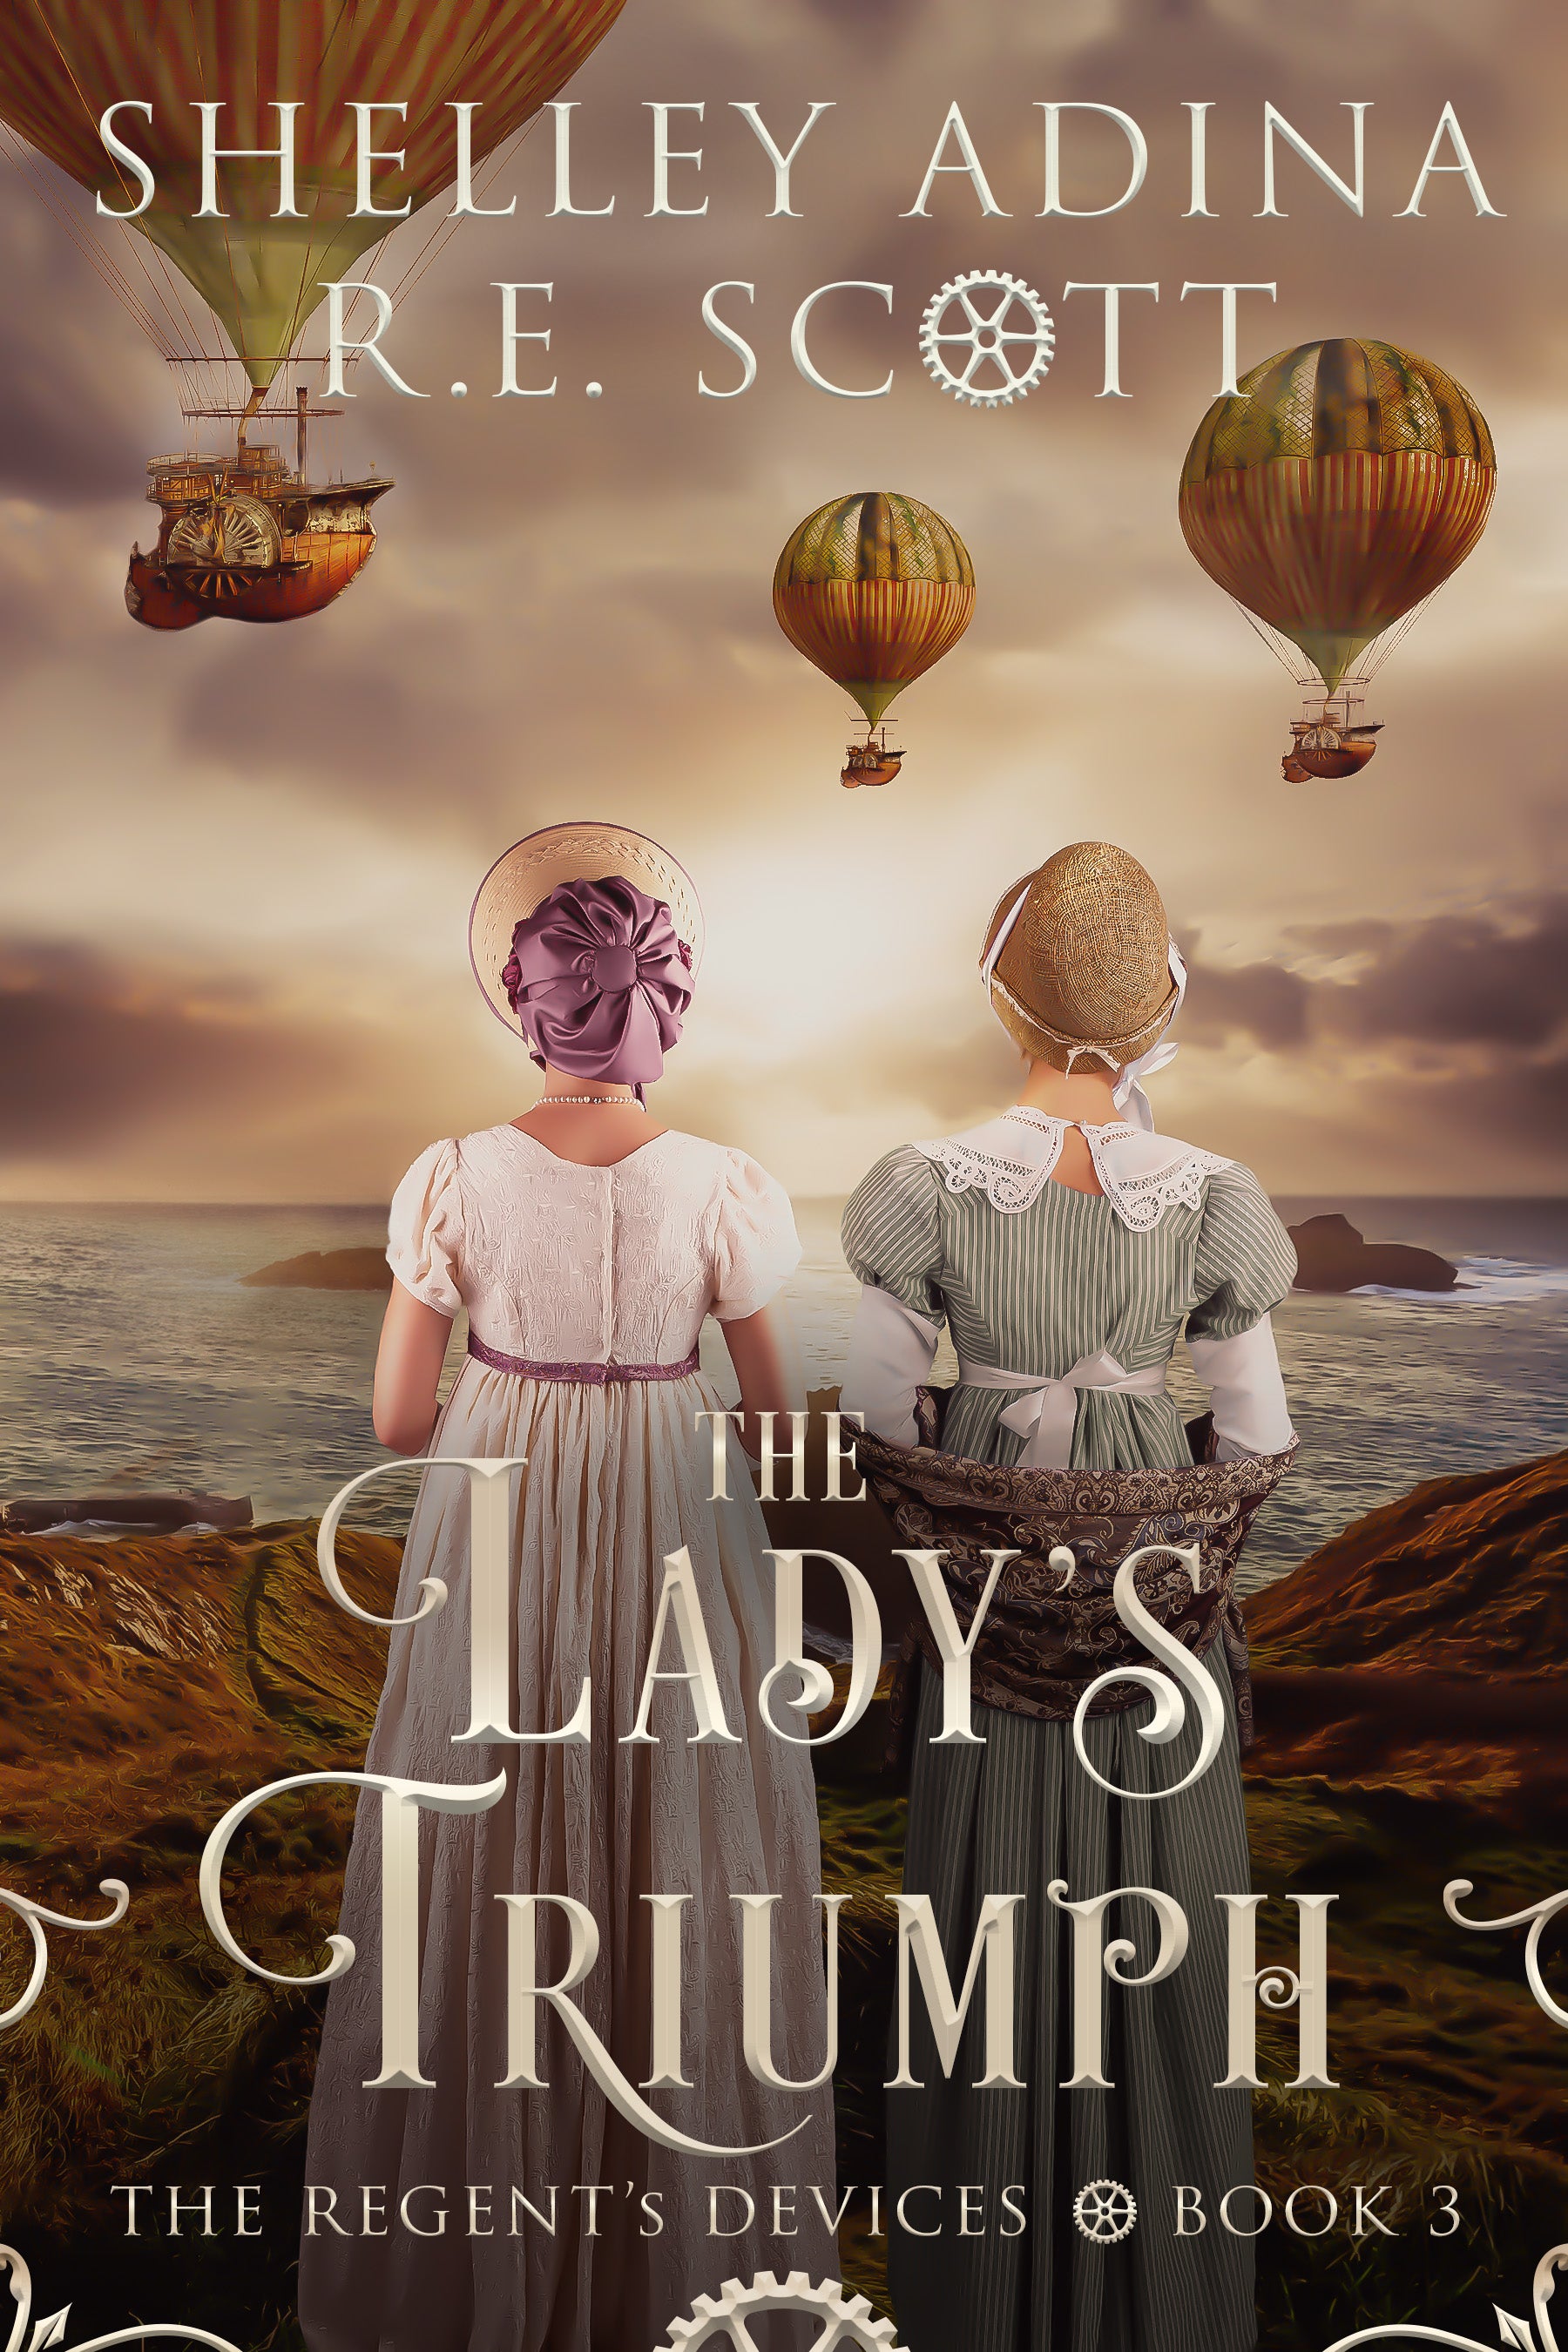 The Lady's Triumph by Shelley Adina and R.E. Scott